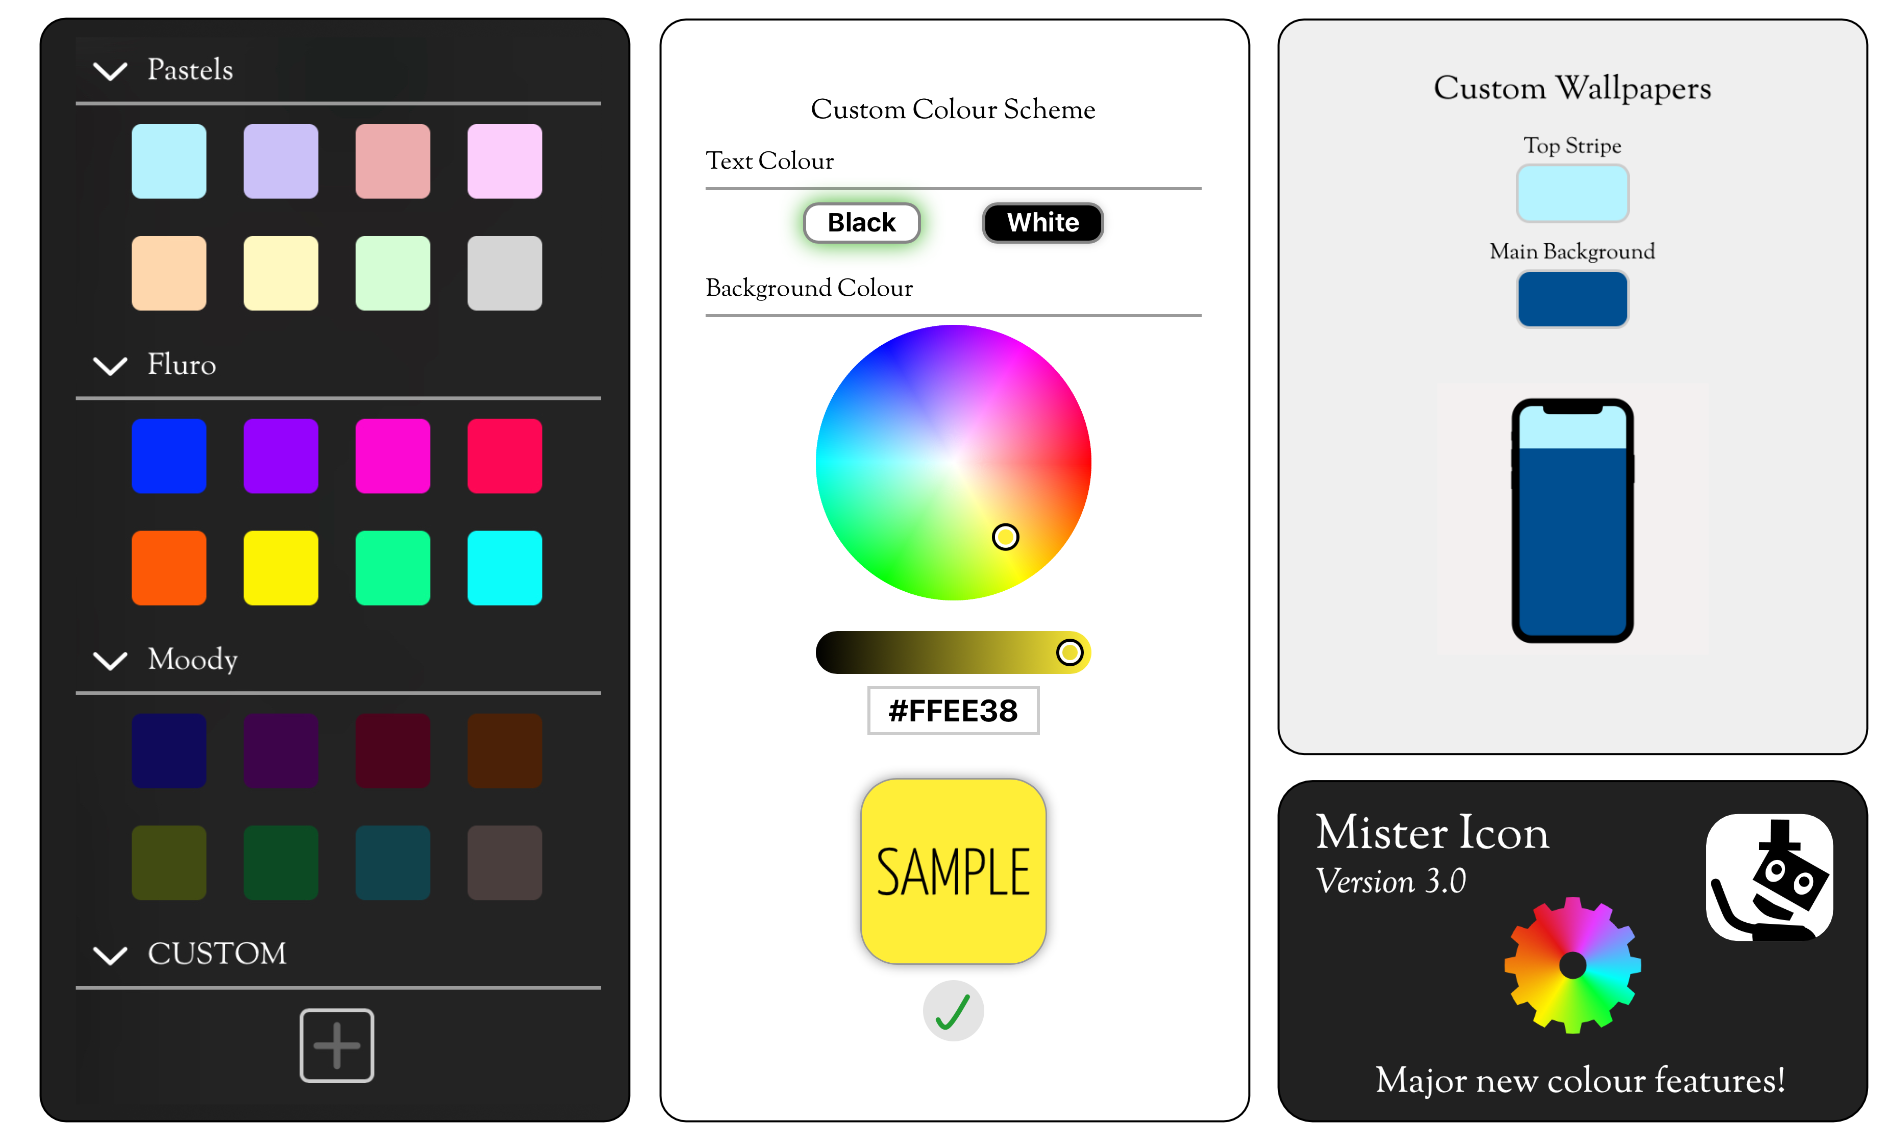 Mister Icon app version 3.0.0 - major new colour features